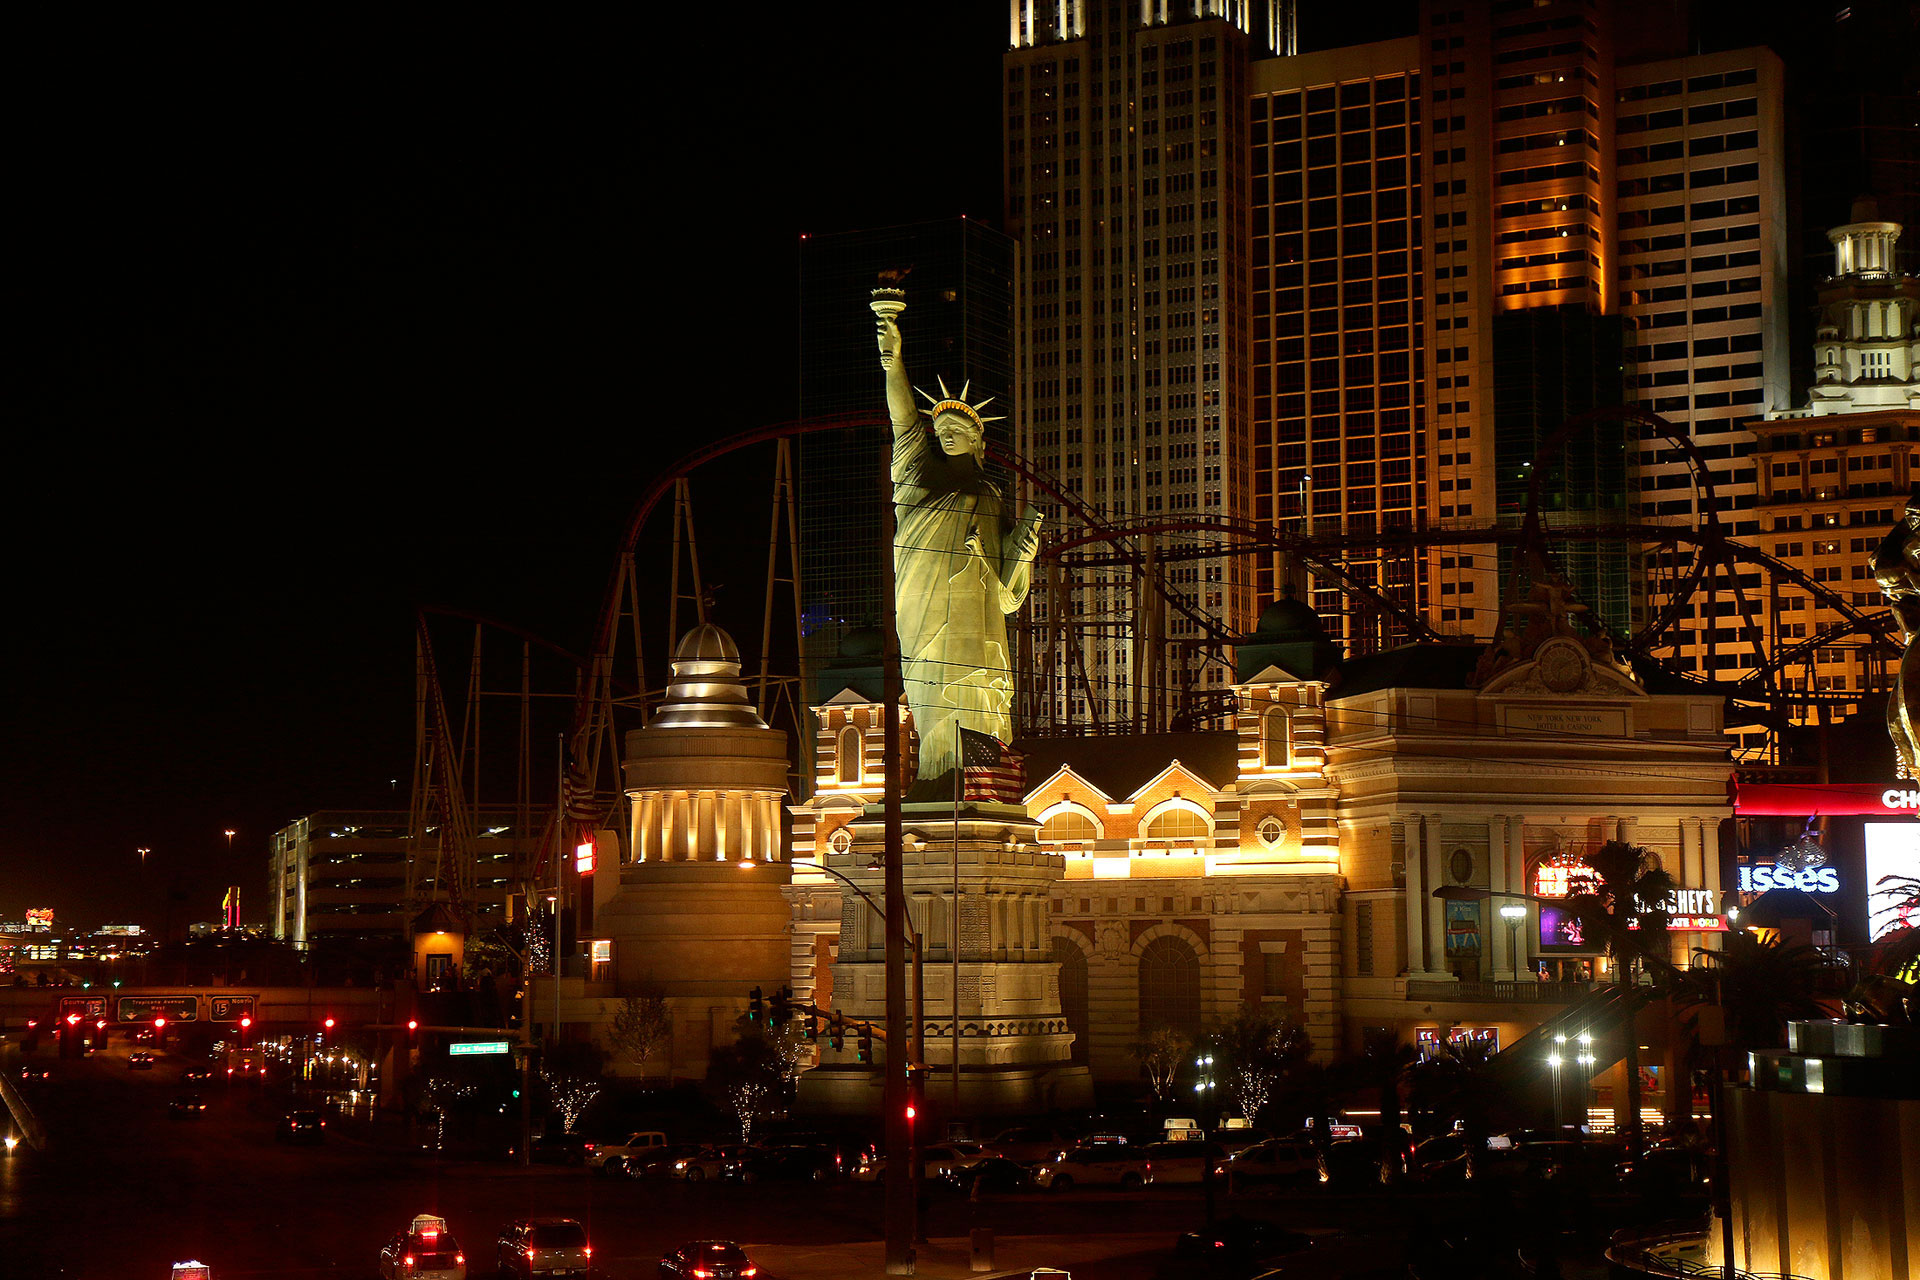 “The Strip” in Las Vegas